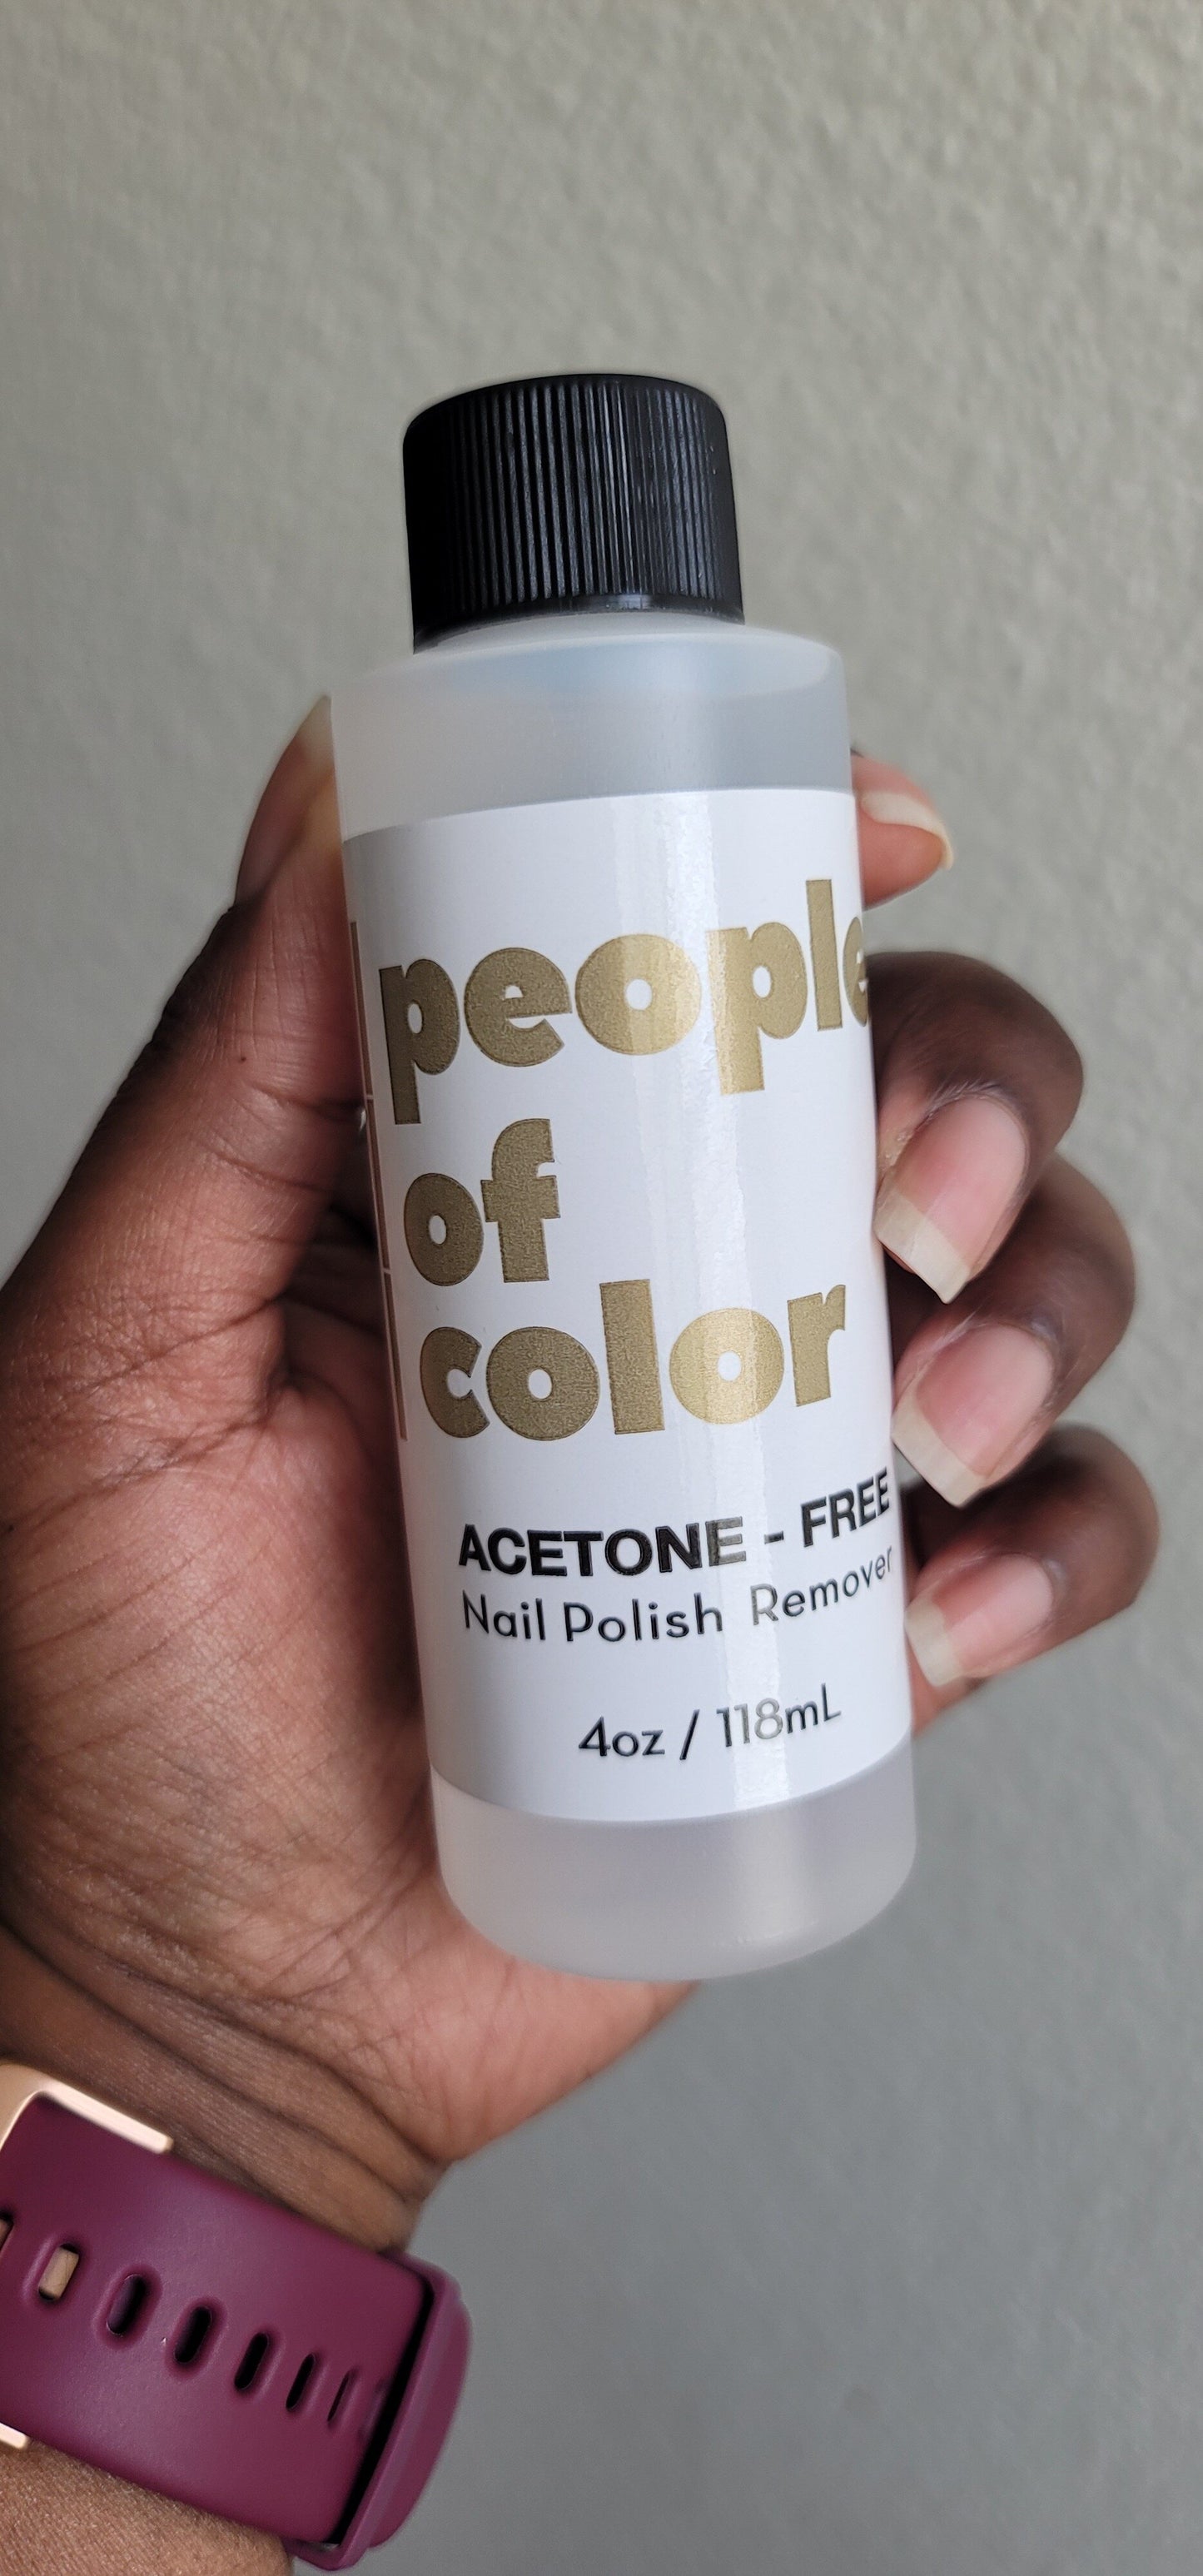 Acetone-Free Nail Polish Remover